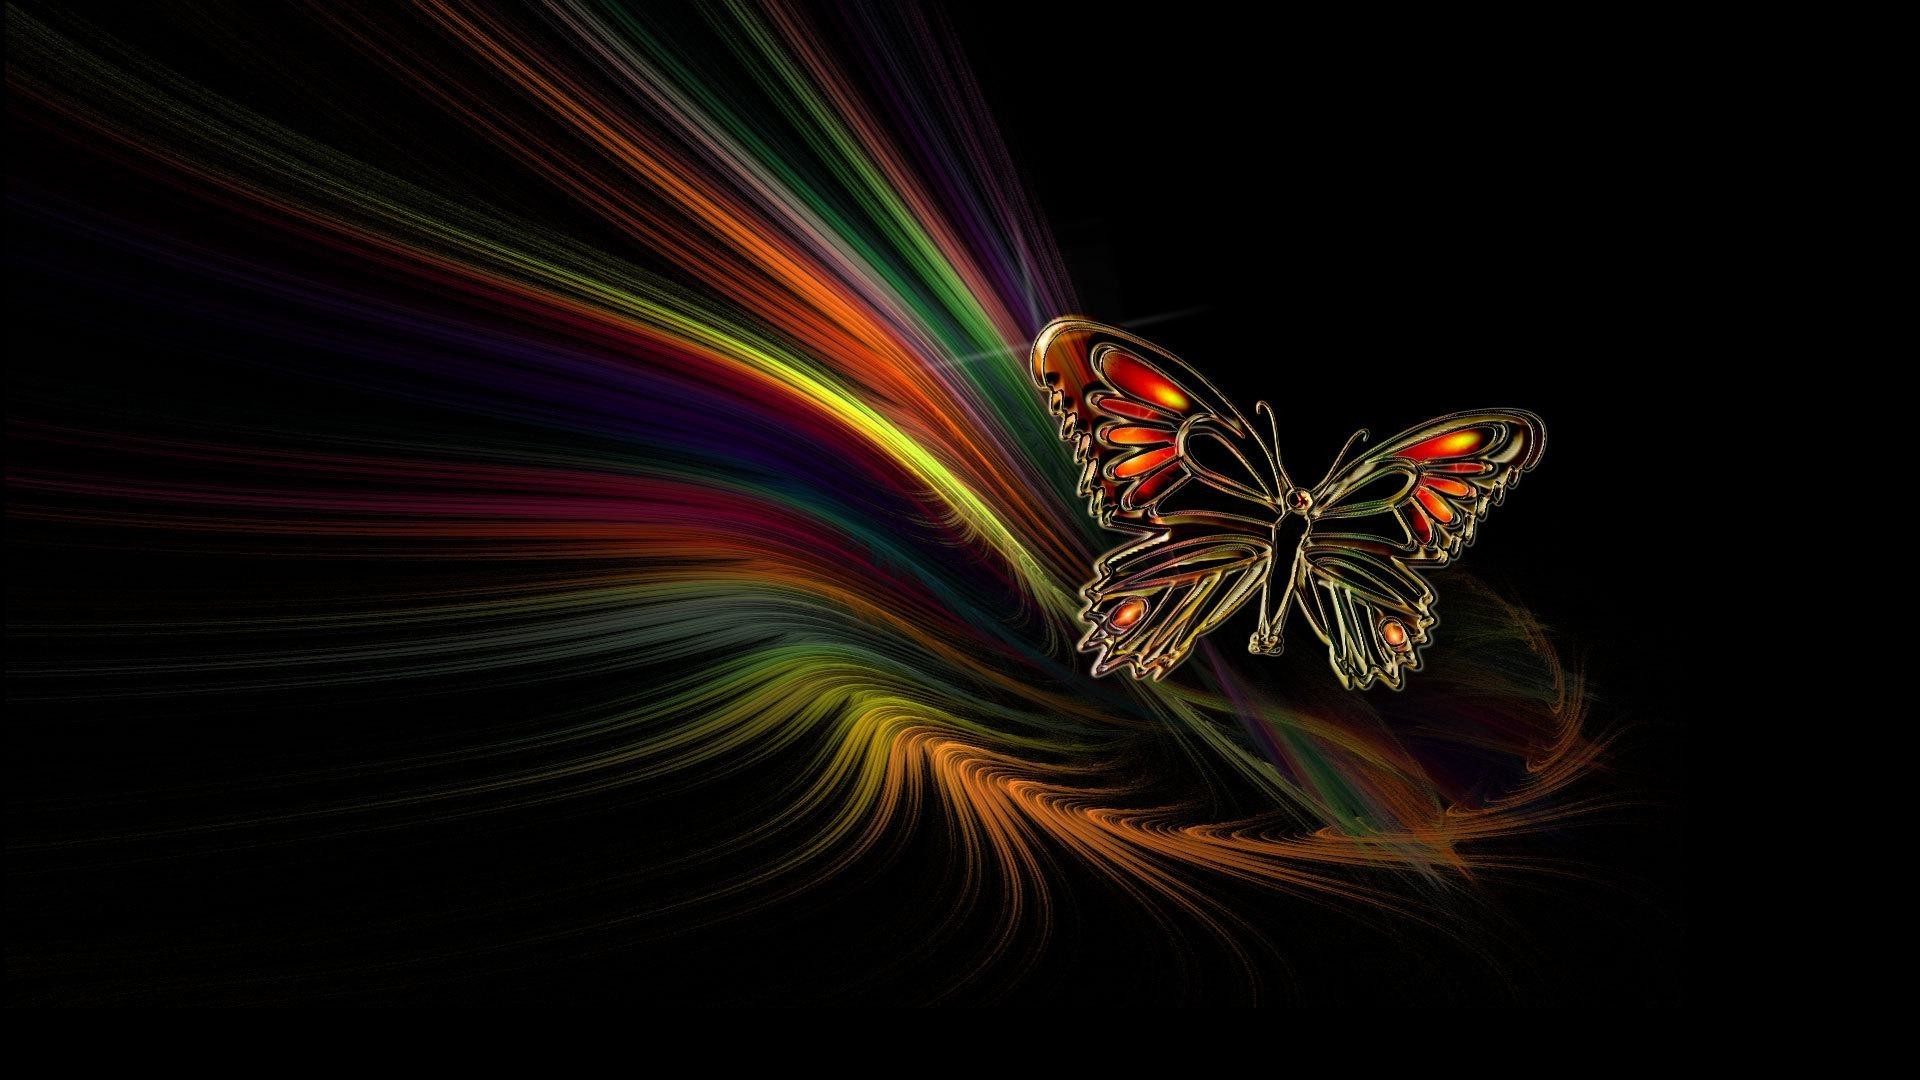 1920x1080 Animated Butterflies Wallpaper 0 HTML code. Butterfly Animated fond ecran hd